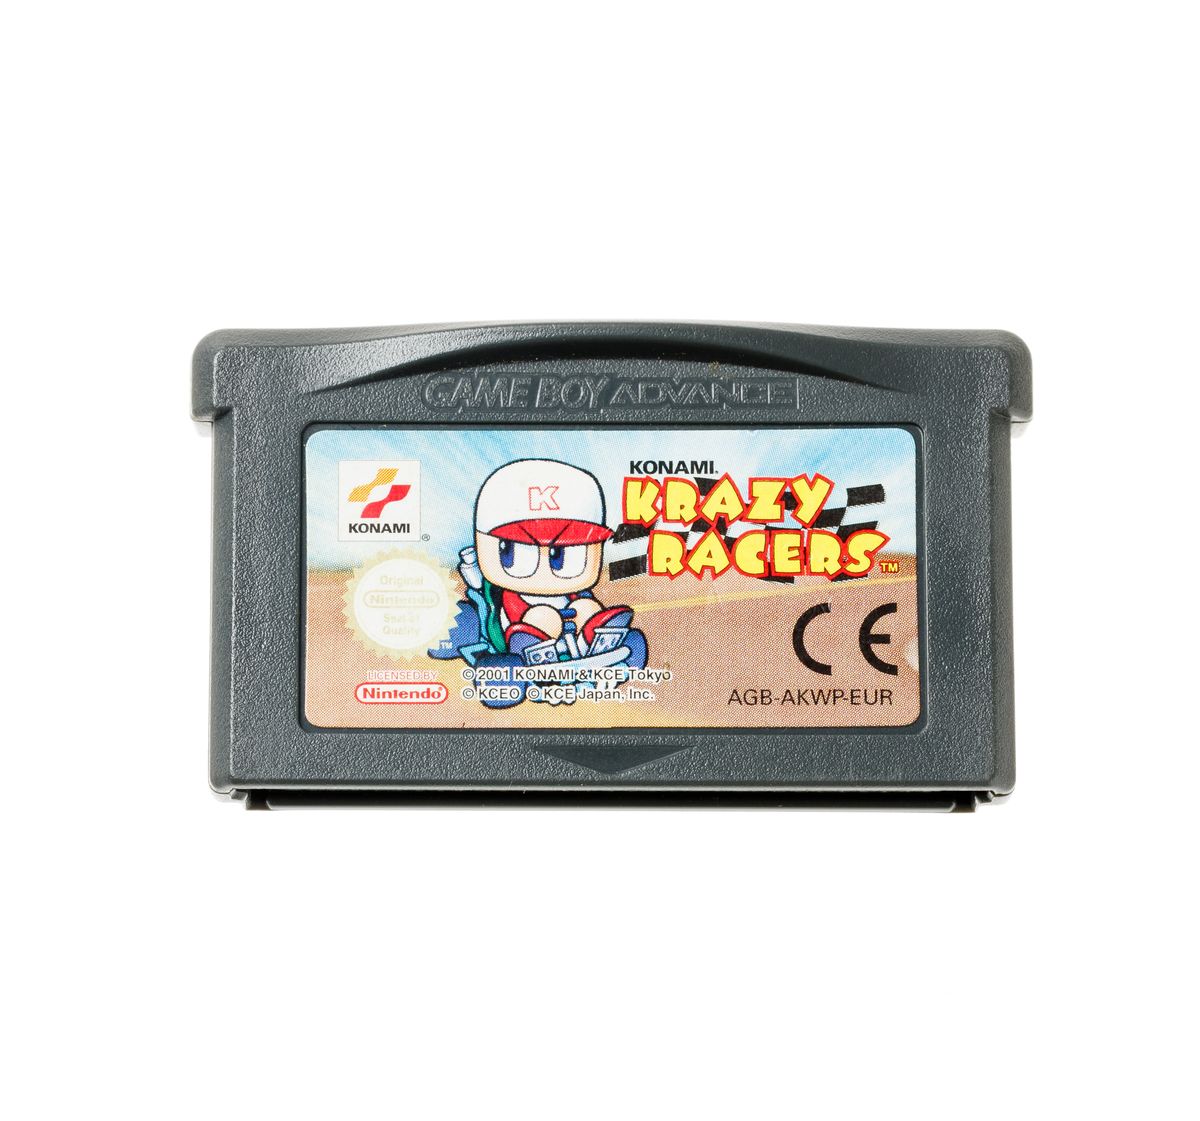 Krazy Racers Kopen | Gameboy Advance Games